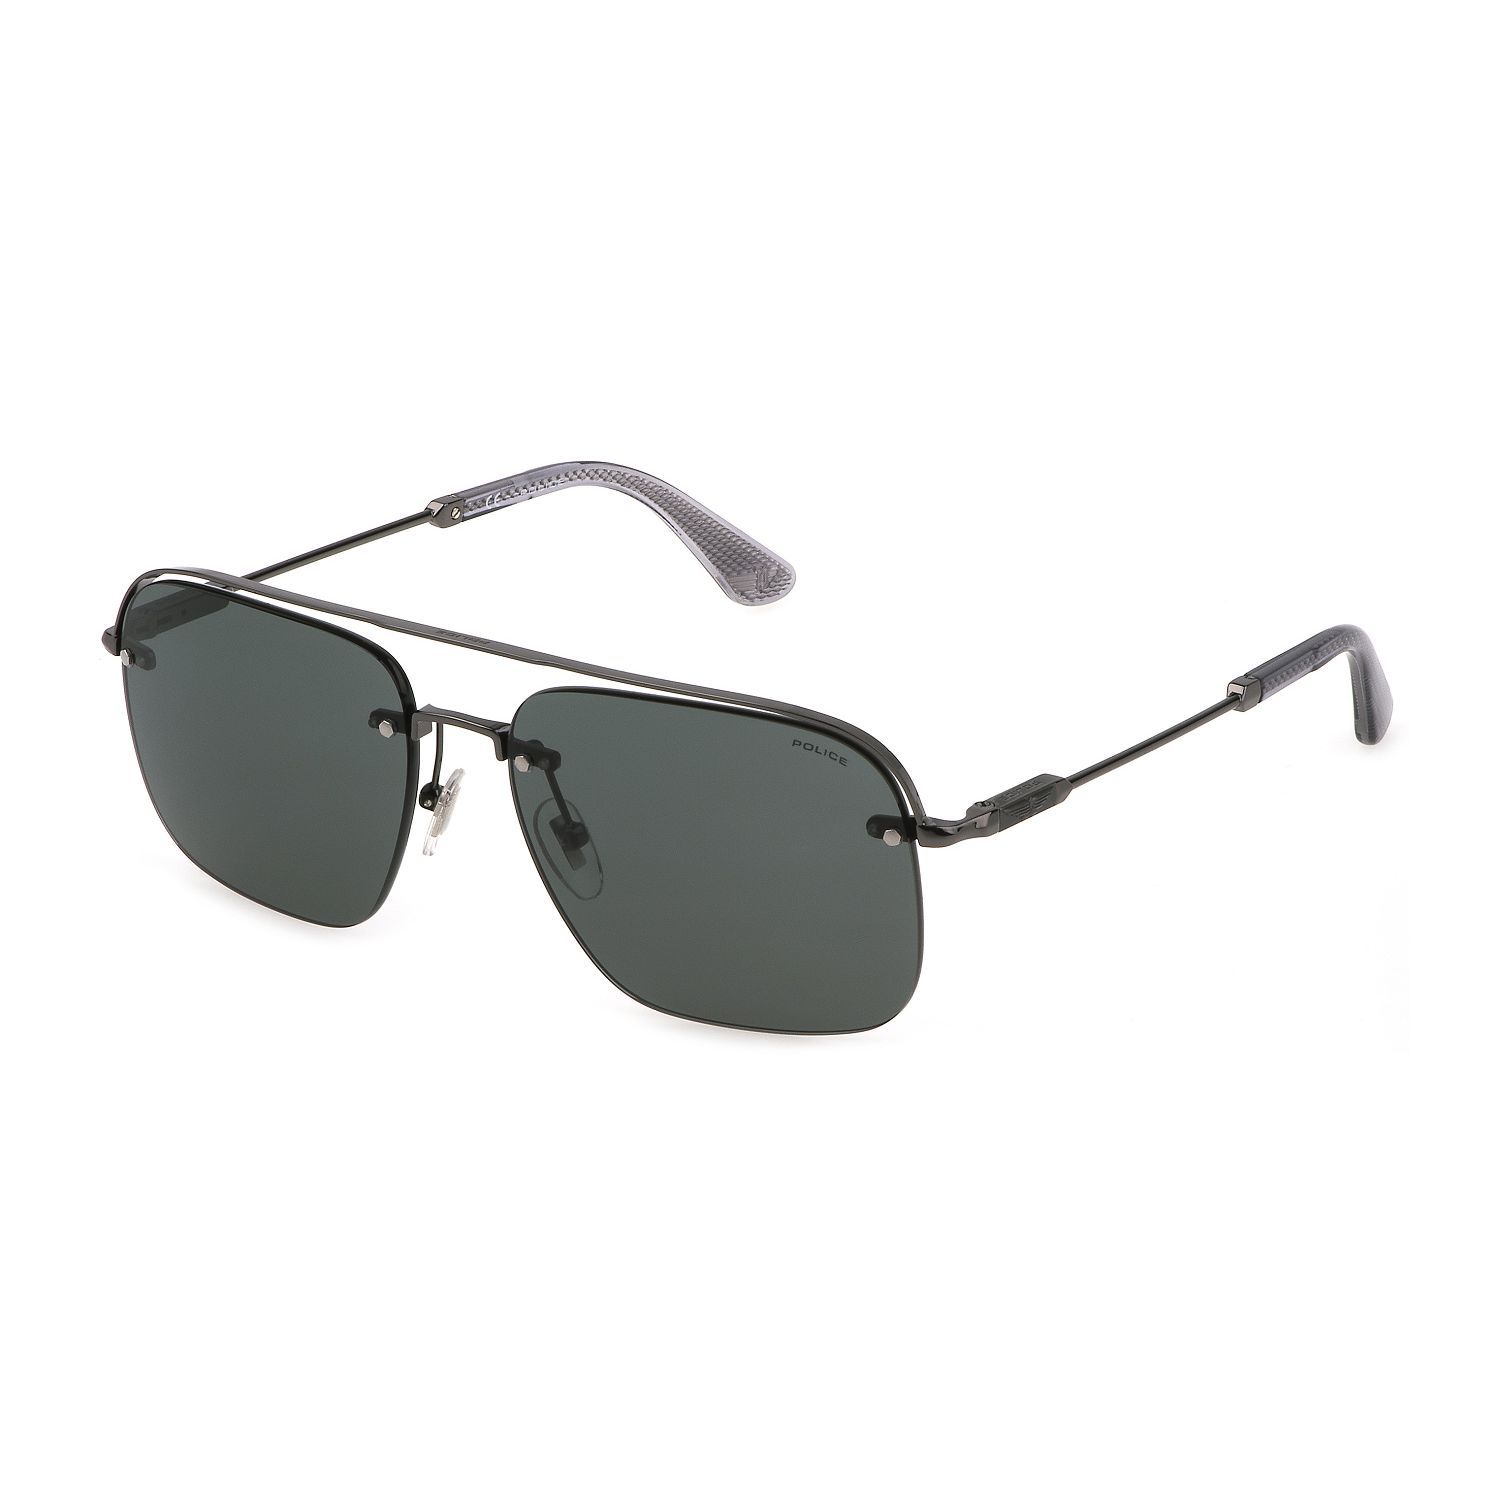 SPLF72M Square Sunglasses 568 - size 59